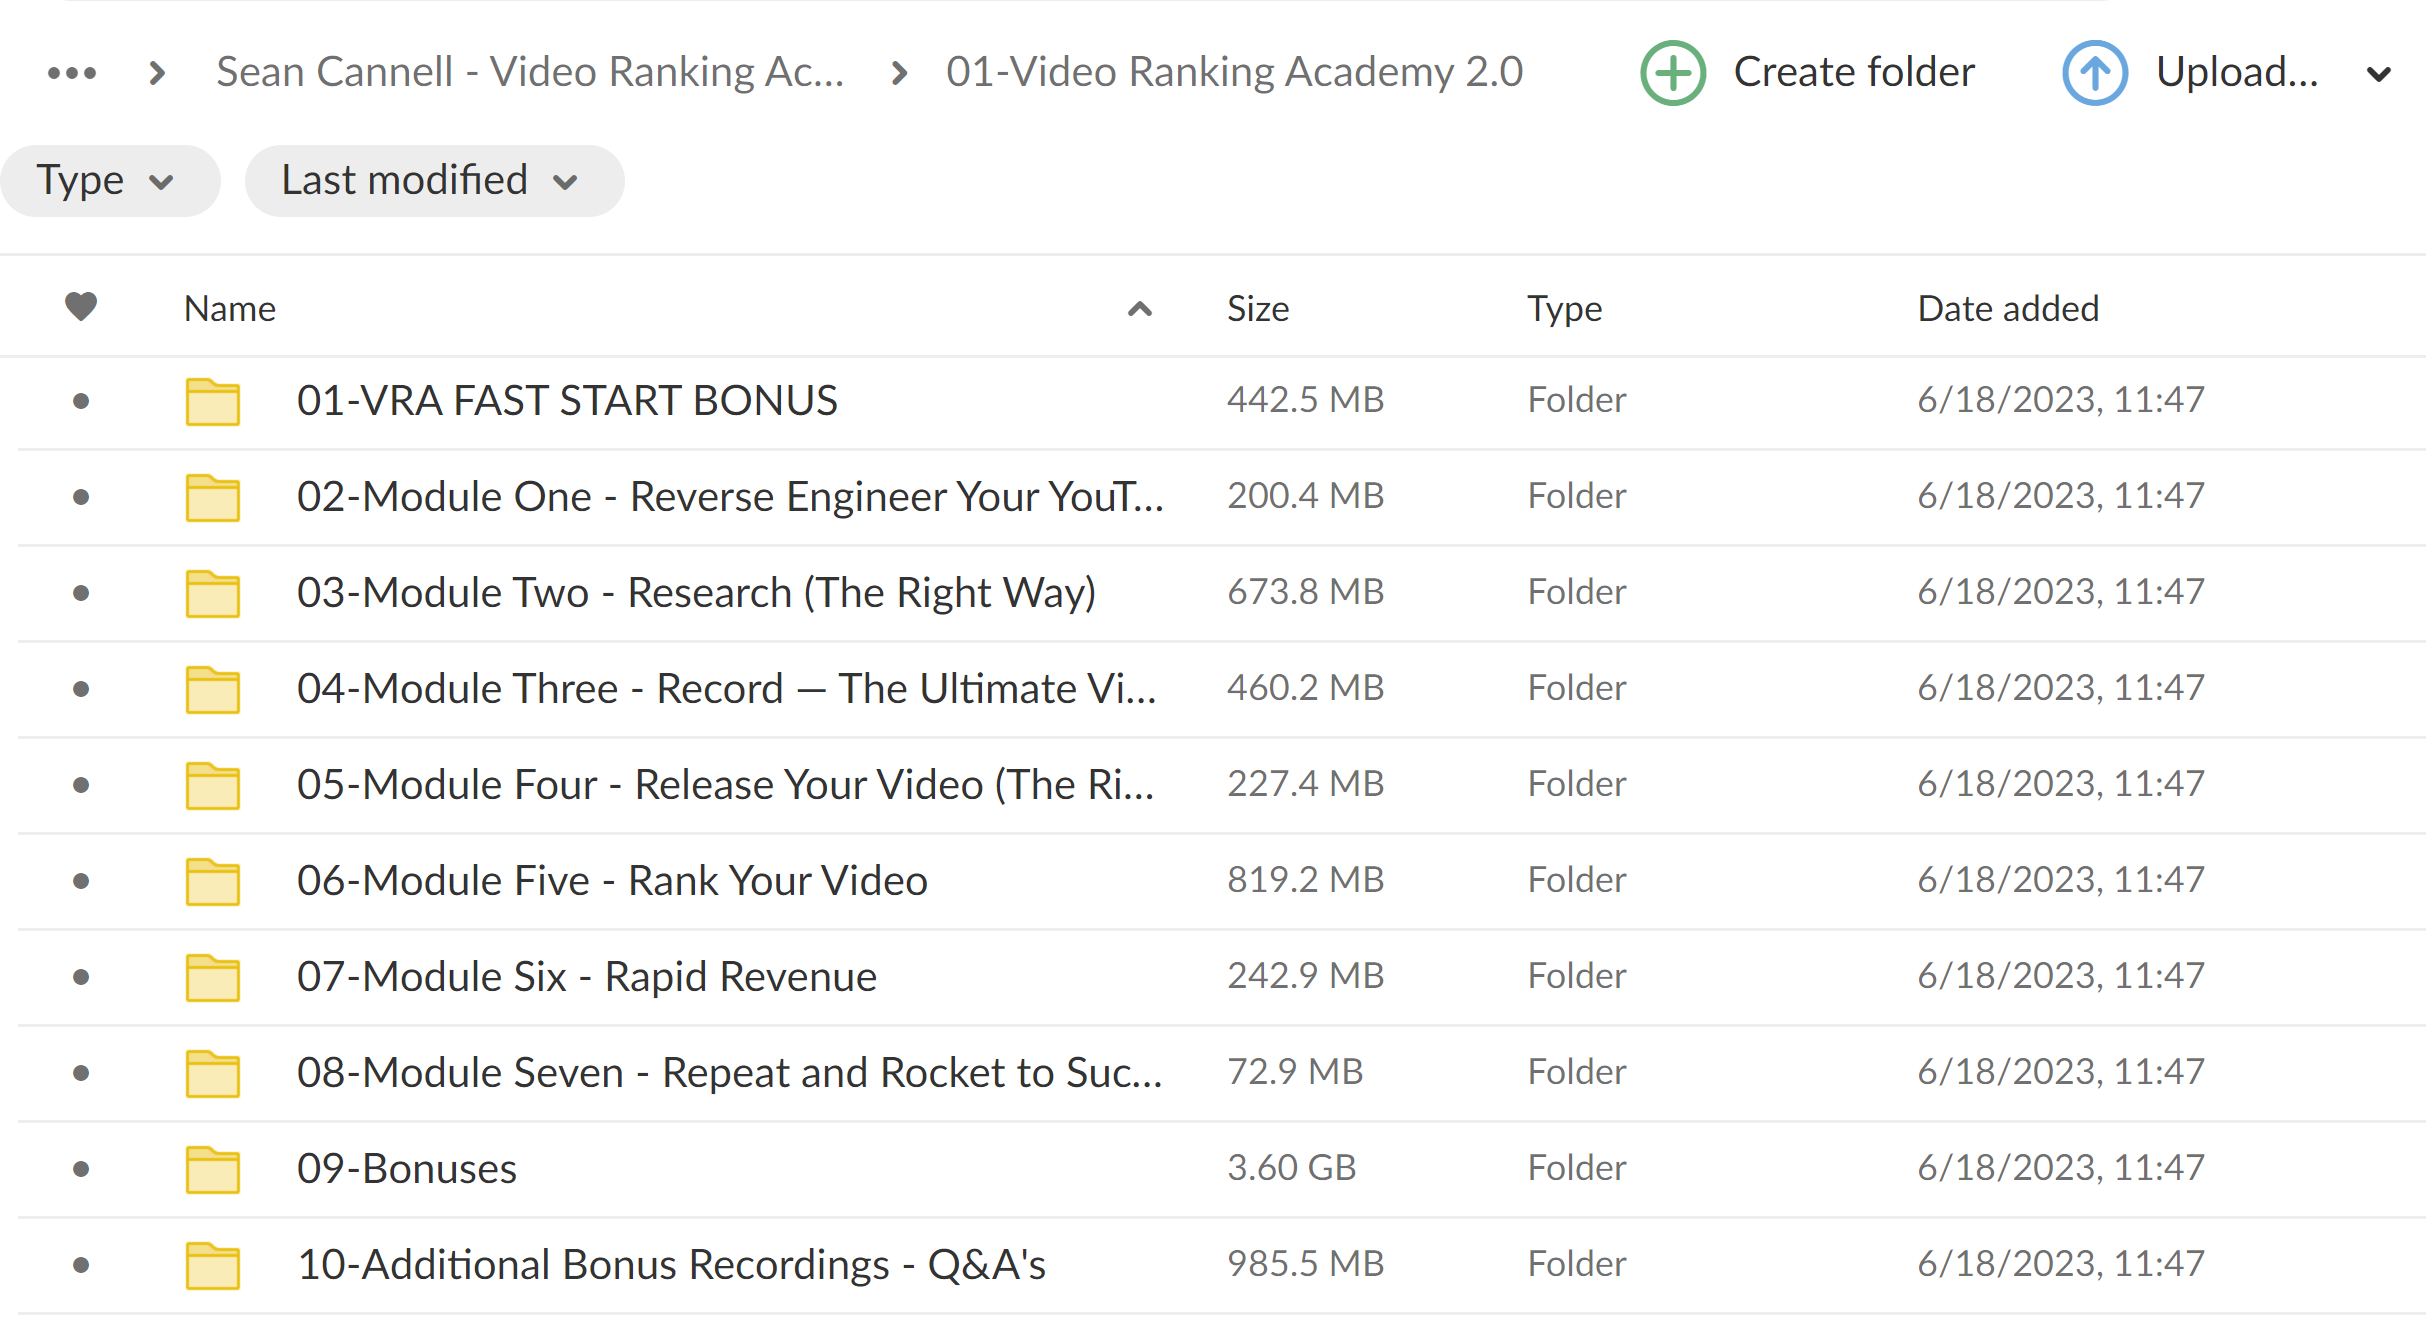 Video Ranking Academy 2.0